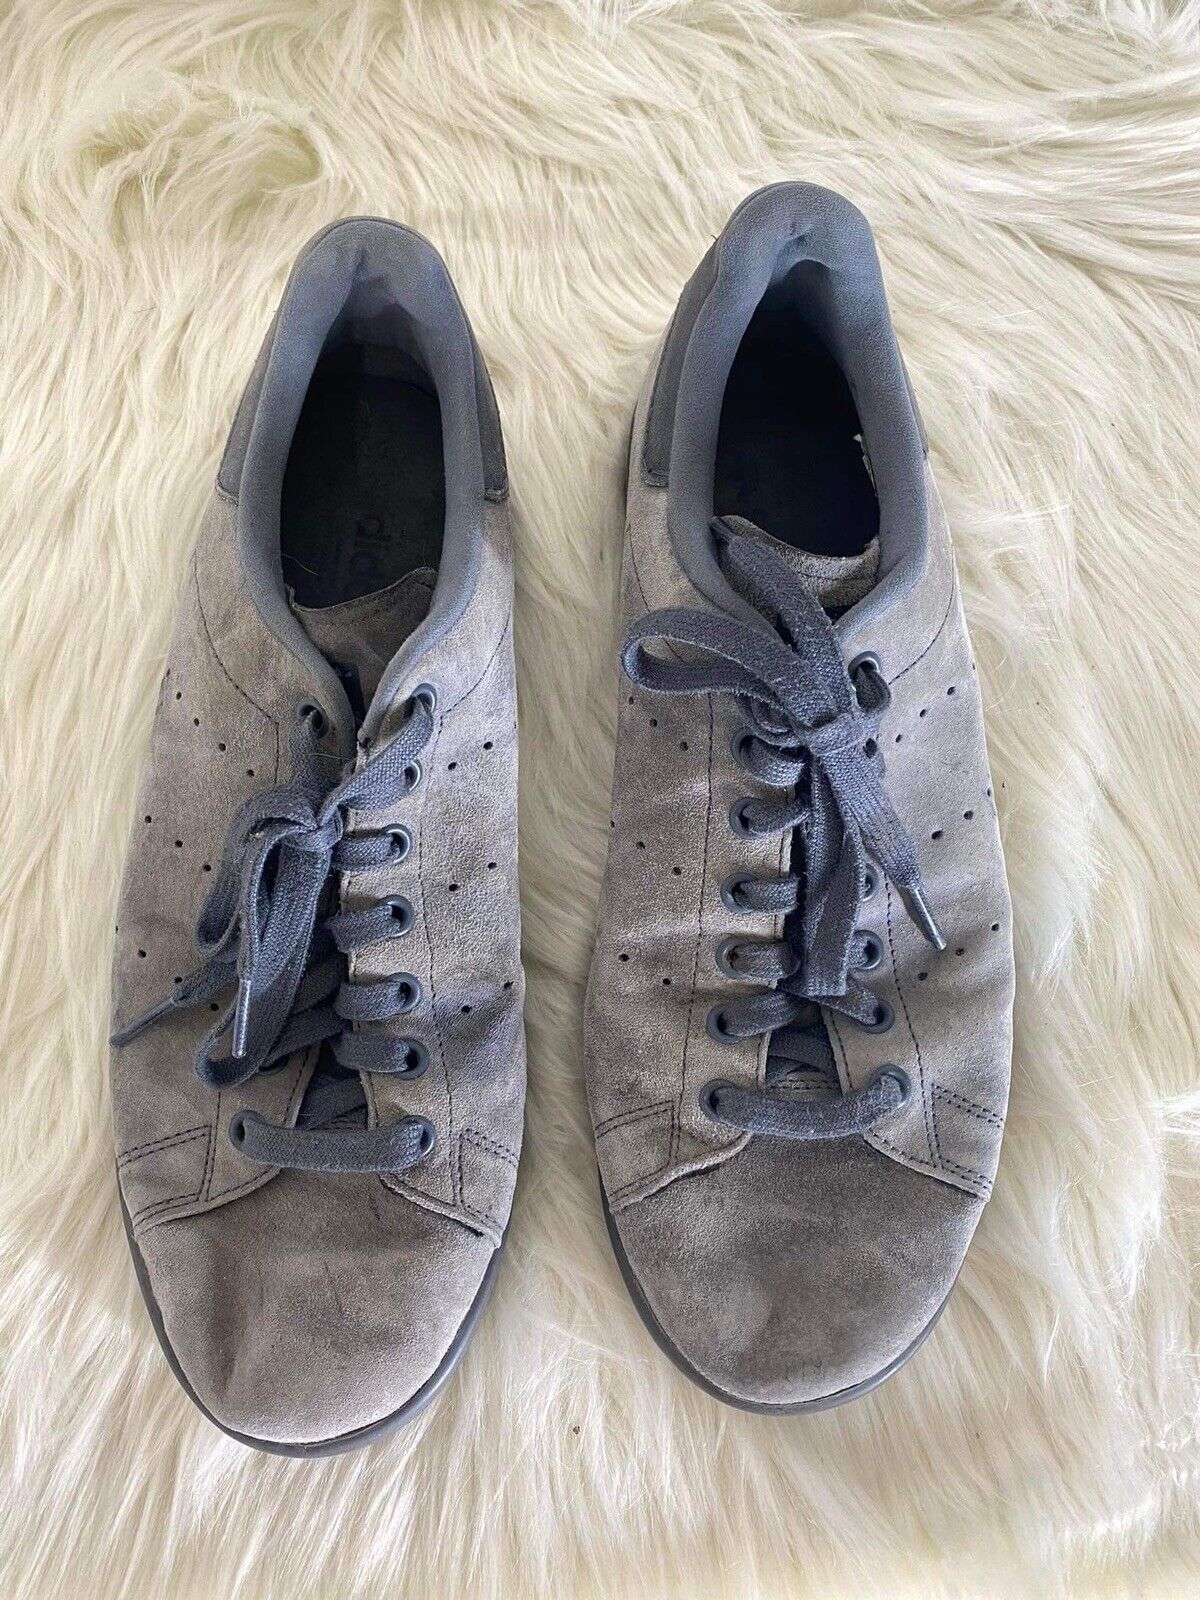 Incesante mayor víctima Adidas Stan Smith Onix Grey Sneaker Shoes | eBay